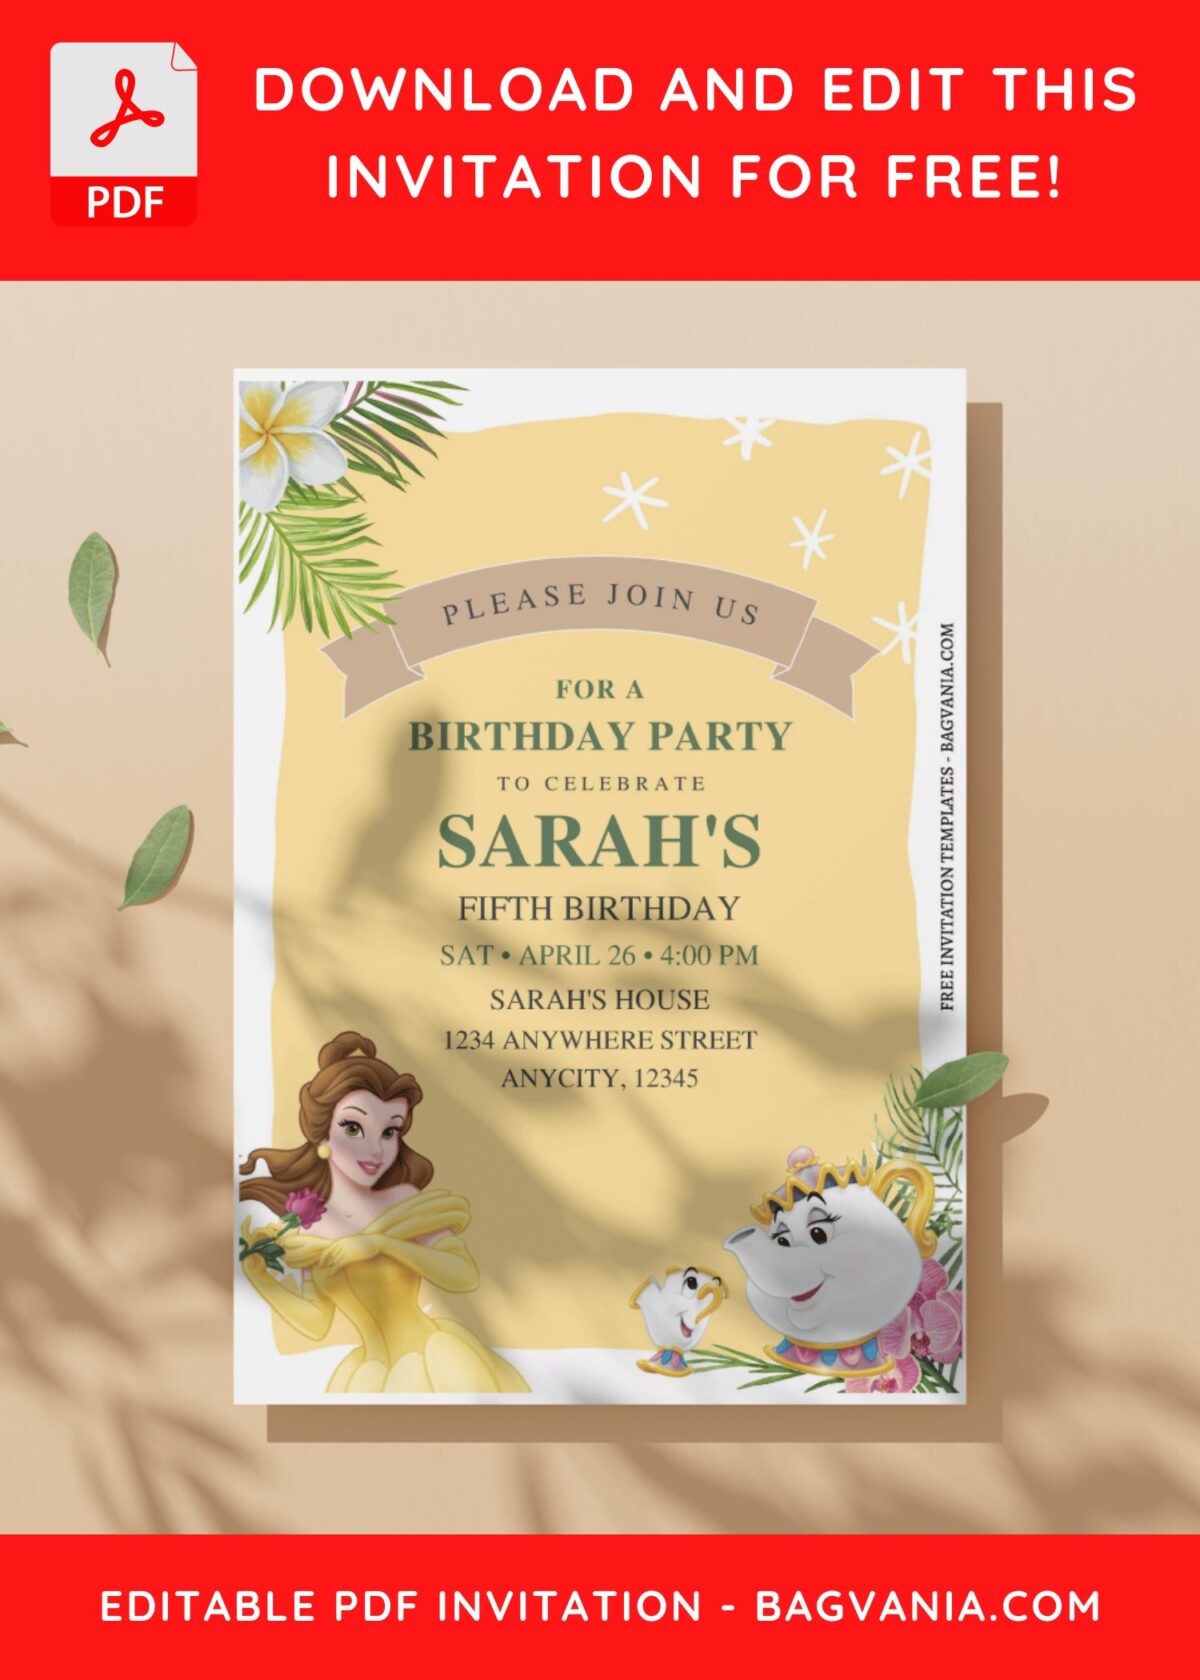 (Free Editable PDF) Enchanted Princess Belle Birthday Invitation Templates I